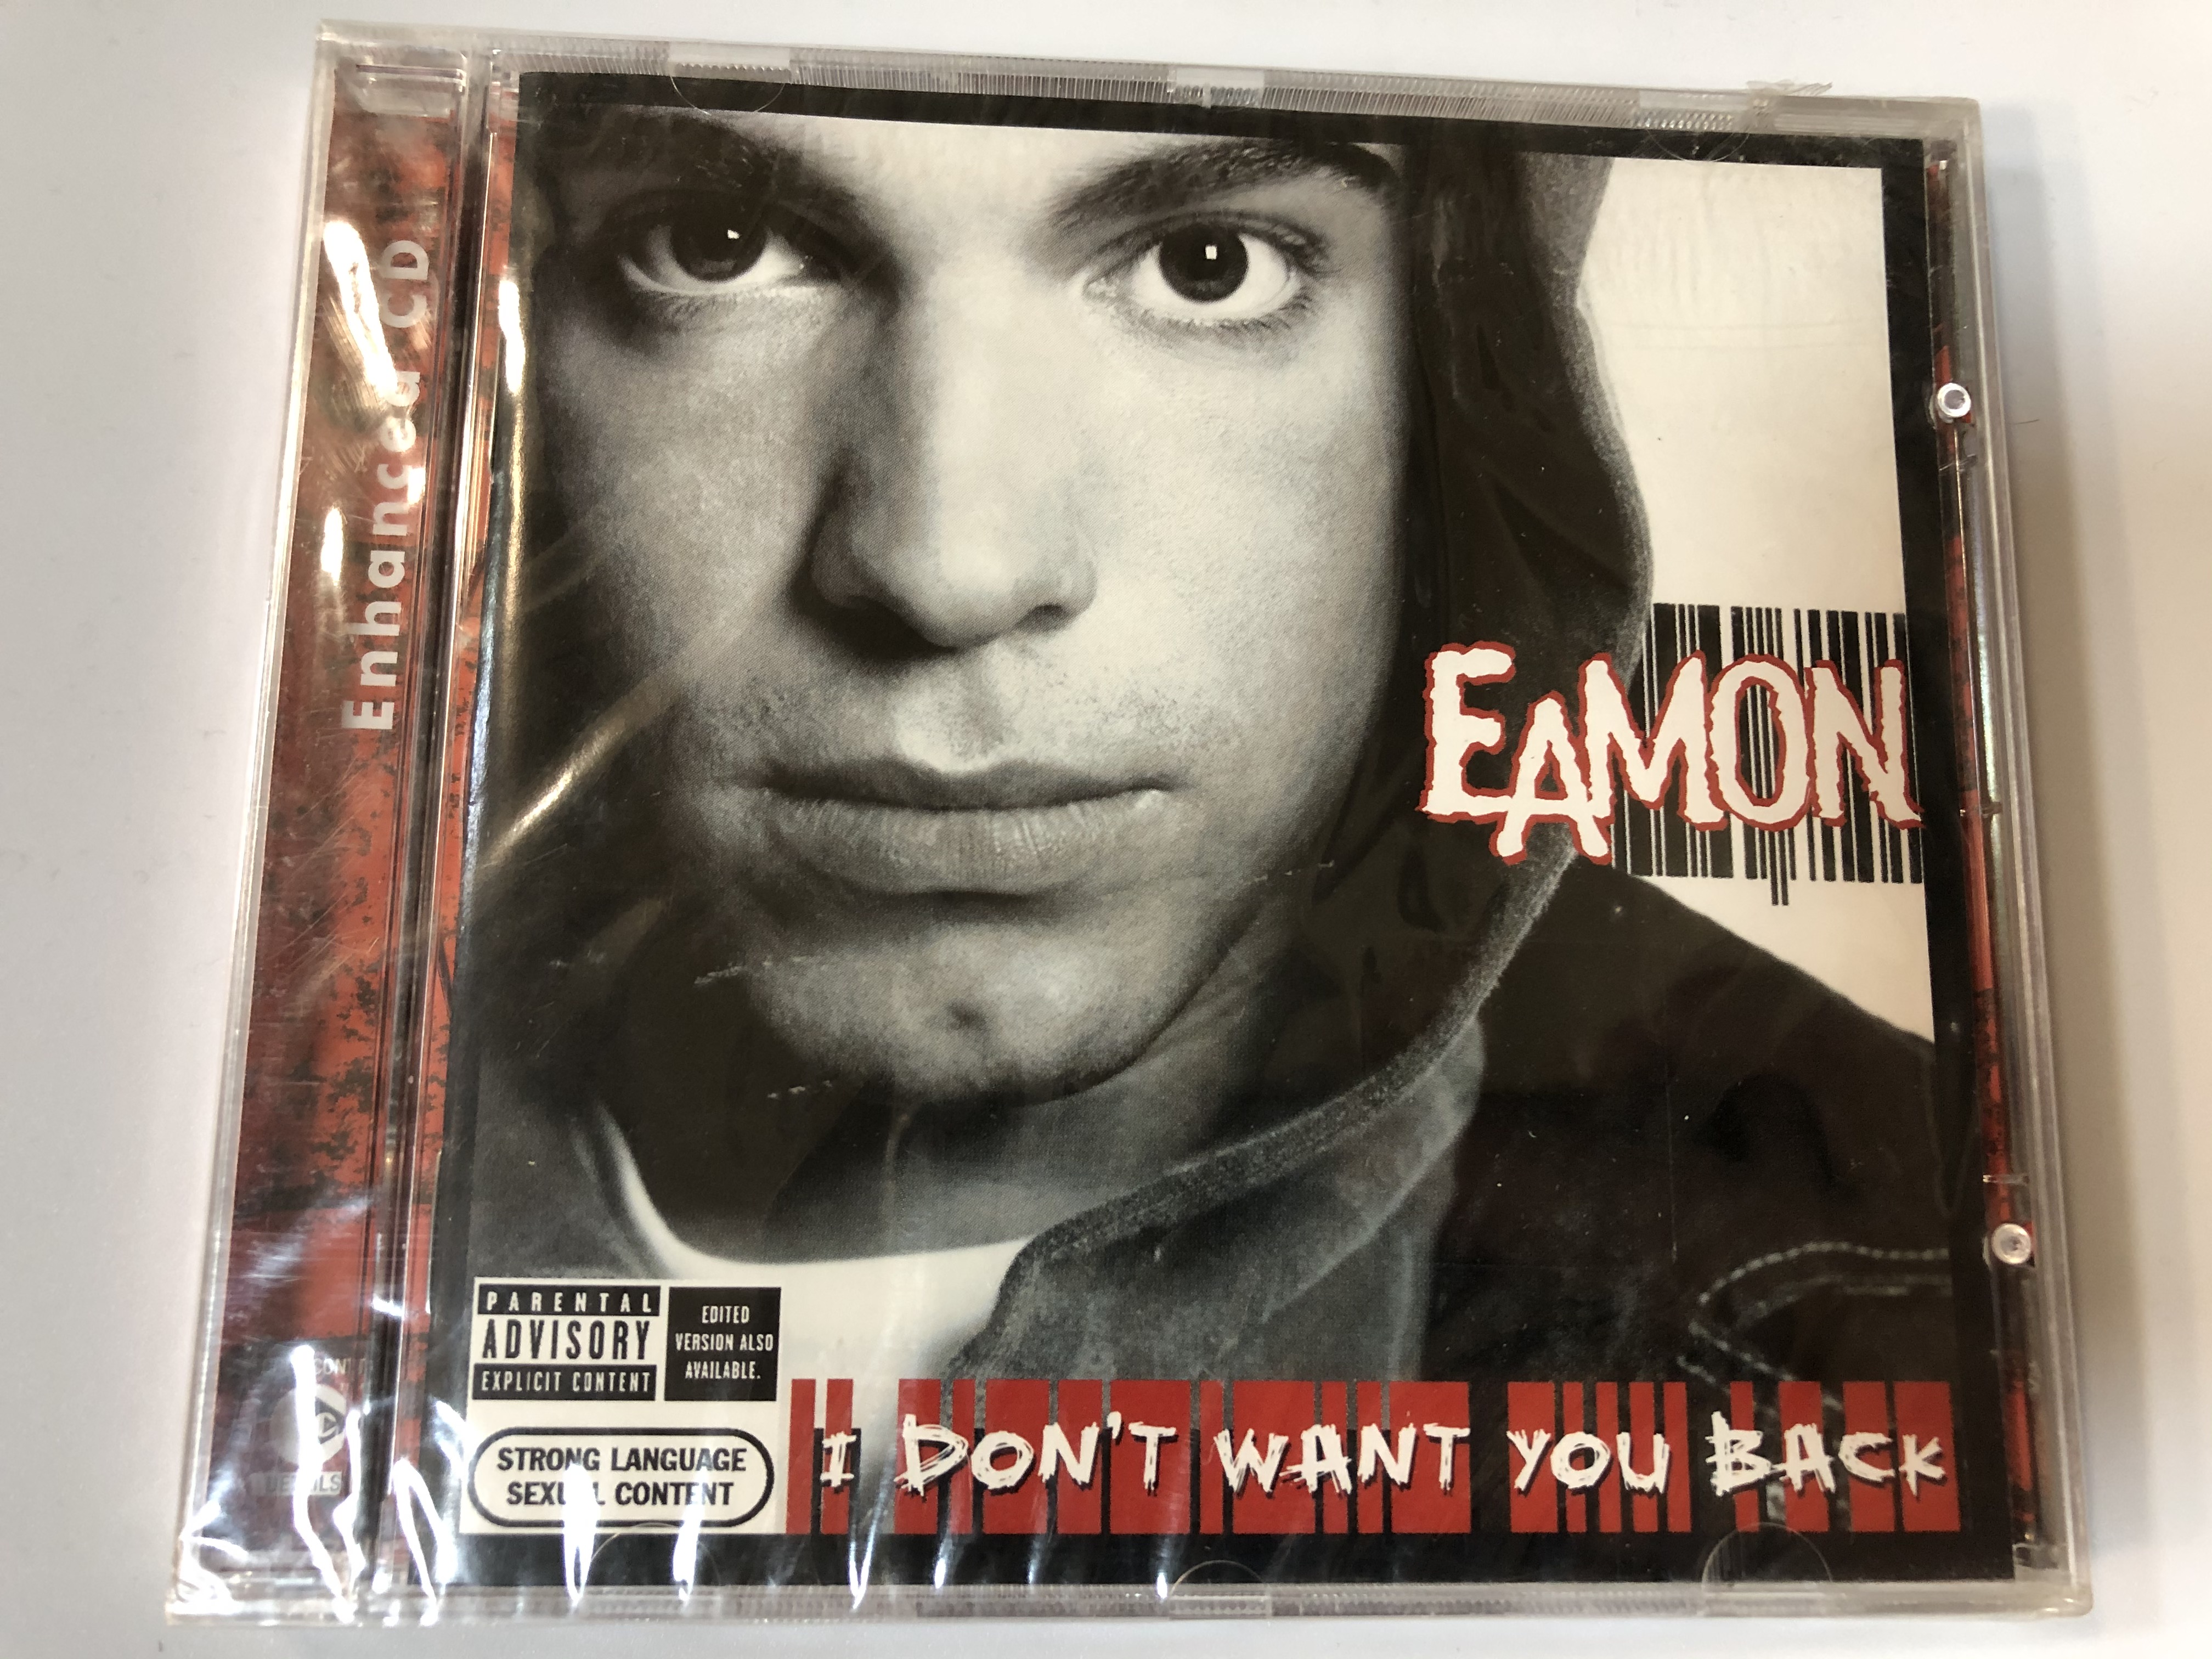 eamon-i-don-t-want-you-back-jive-audio-cd-2004-82876-60927-2-1-.jpg